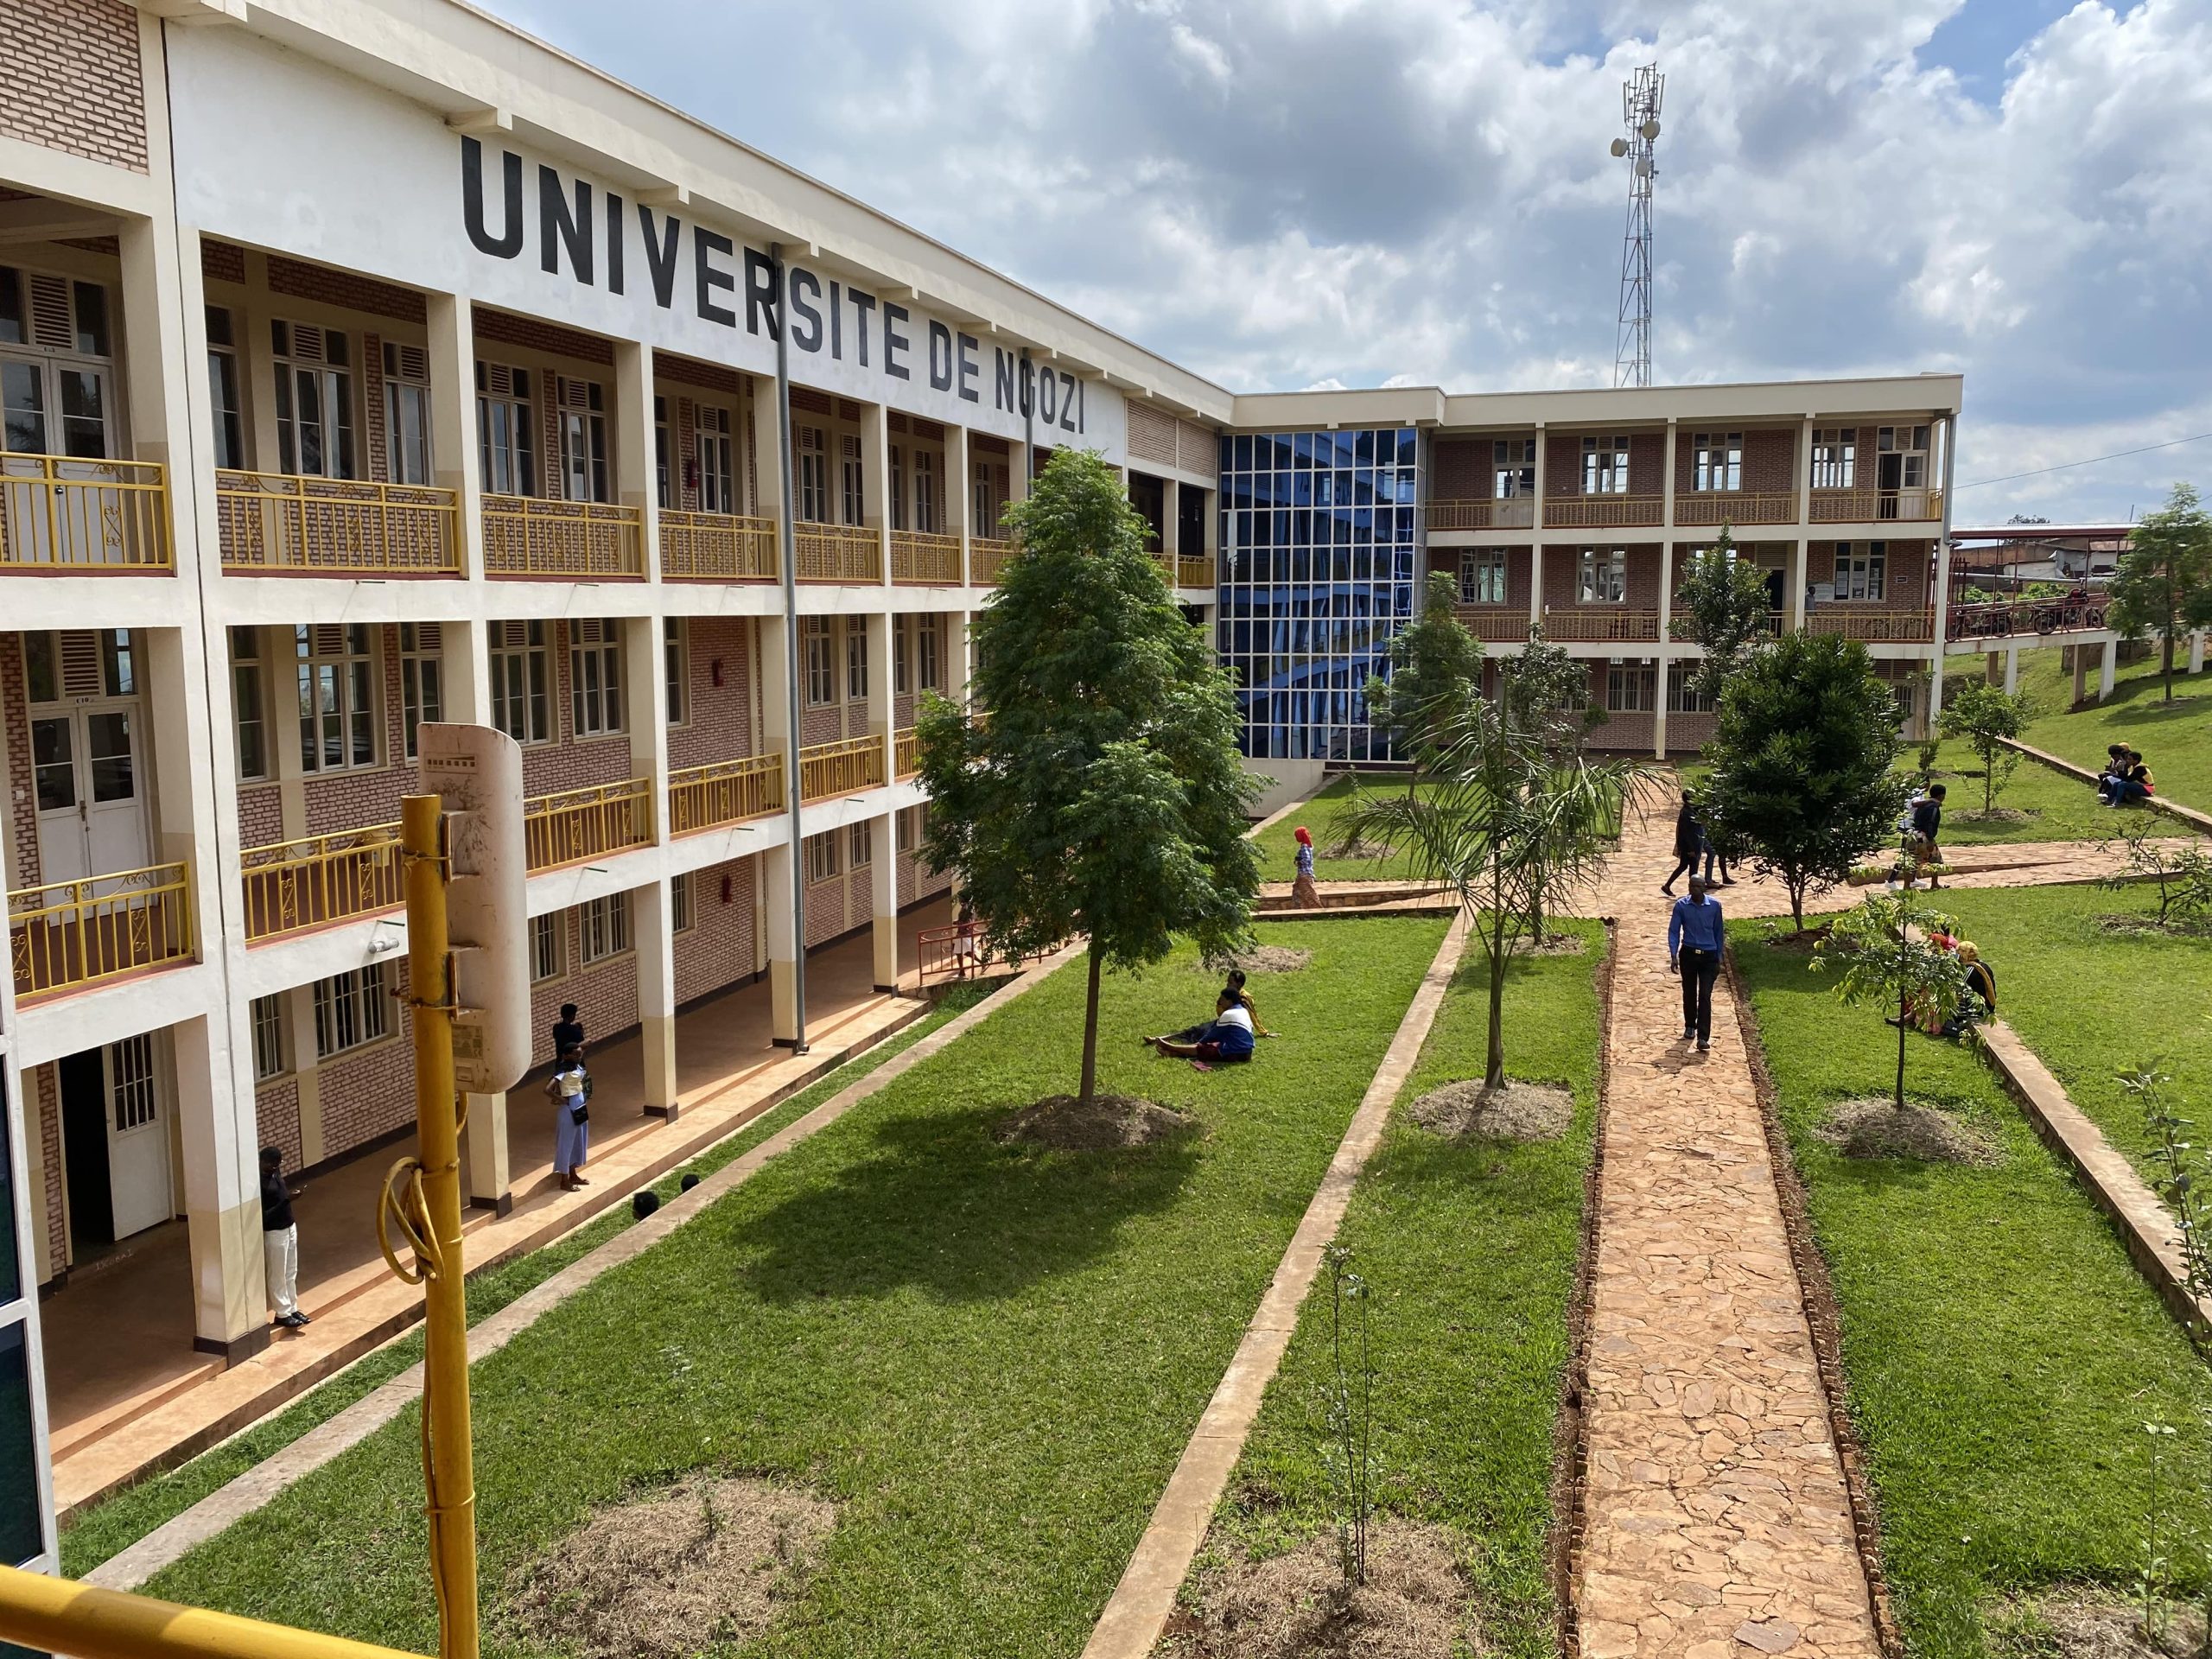 Università di Ngozi.